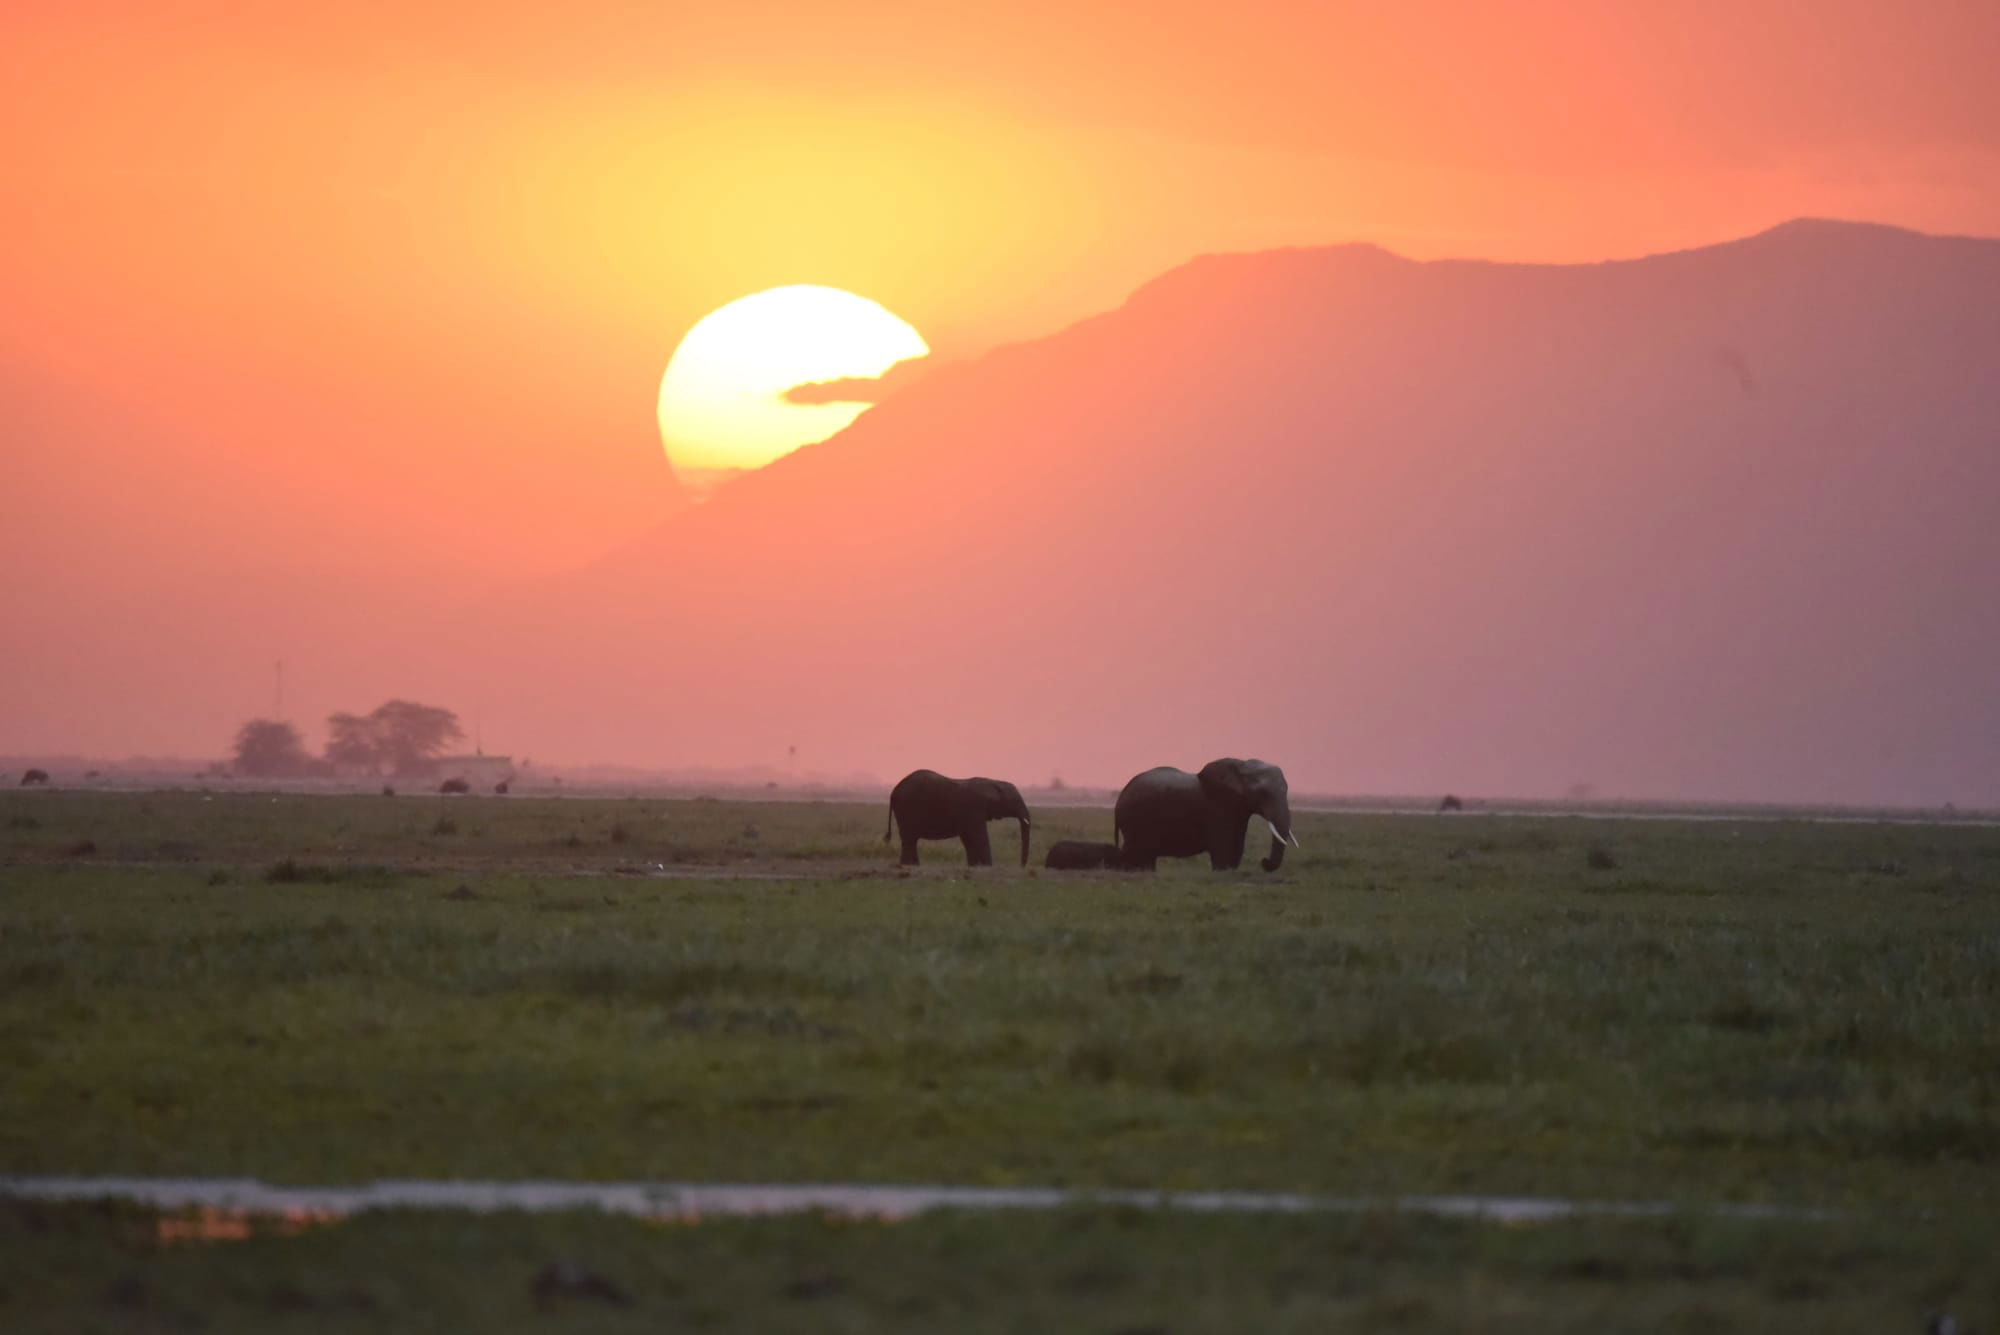 Sunset in Amboseli with Elephants